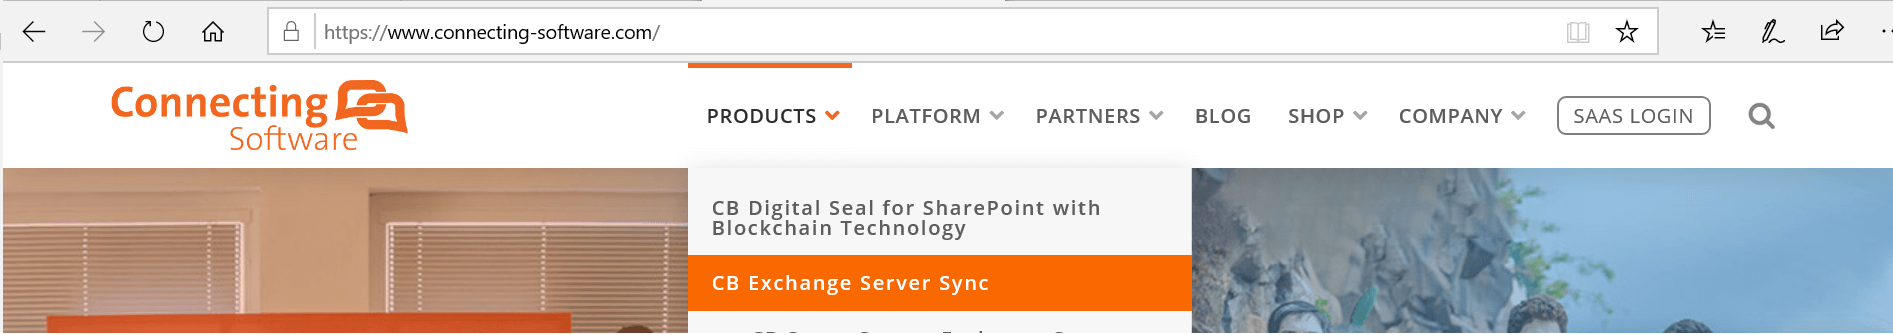 CB Exchange Server Sync in menu